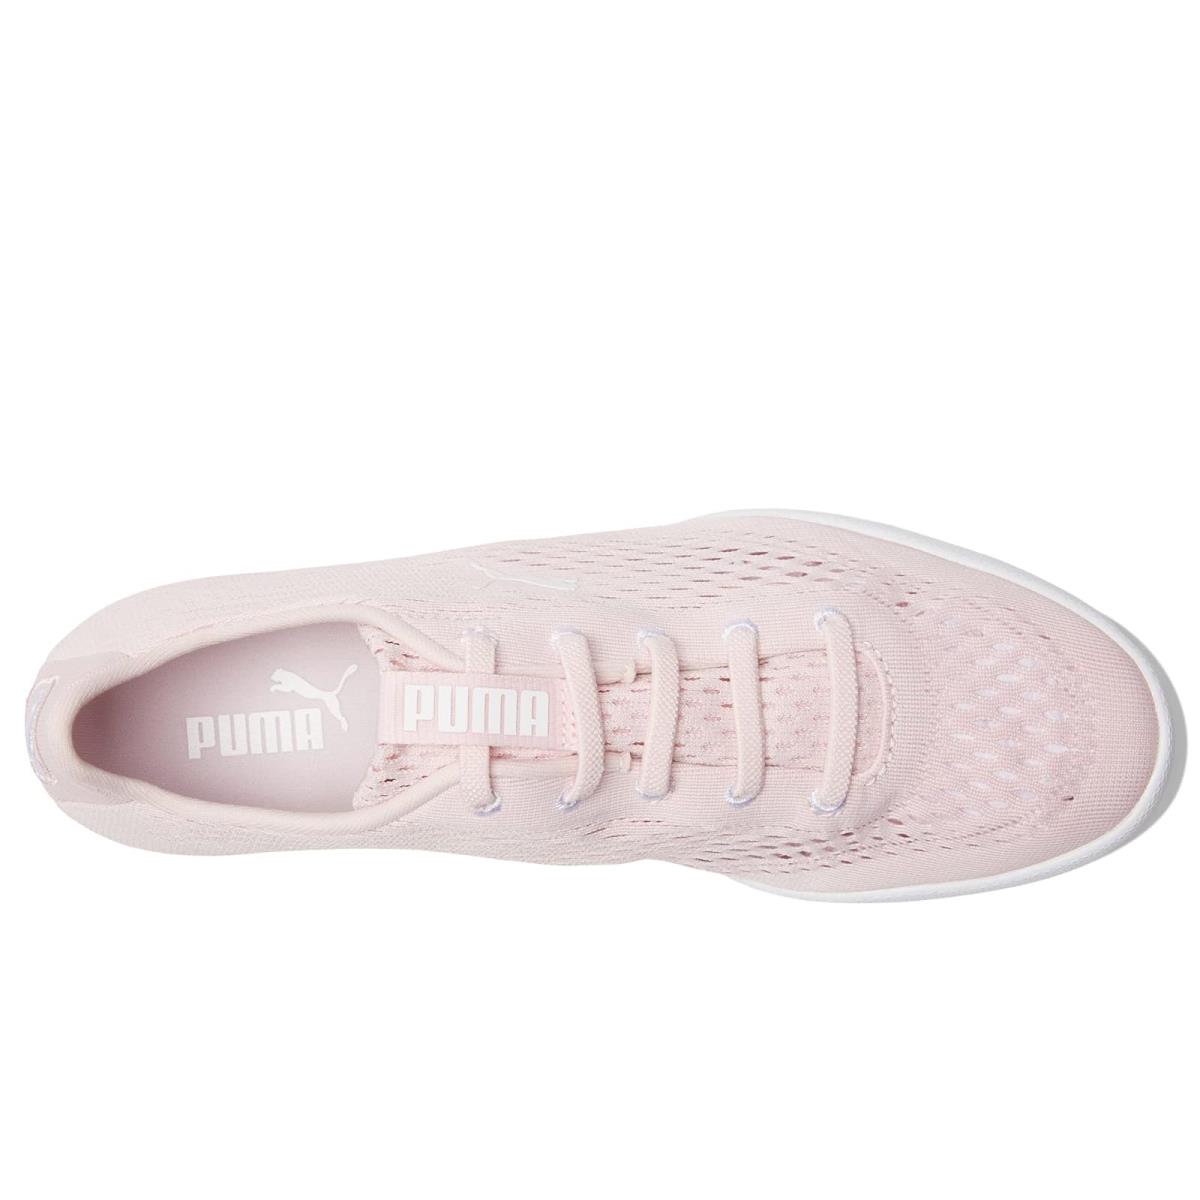 Puma shoes  - Chalk Pink/Puma White 0